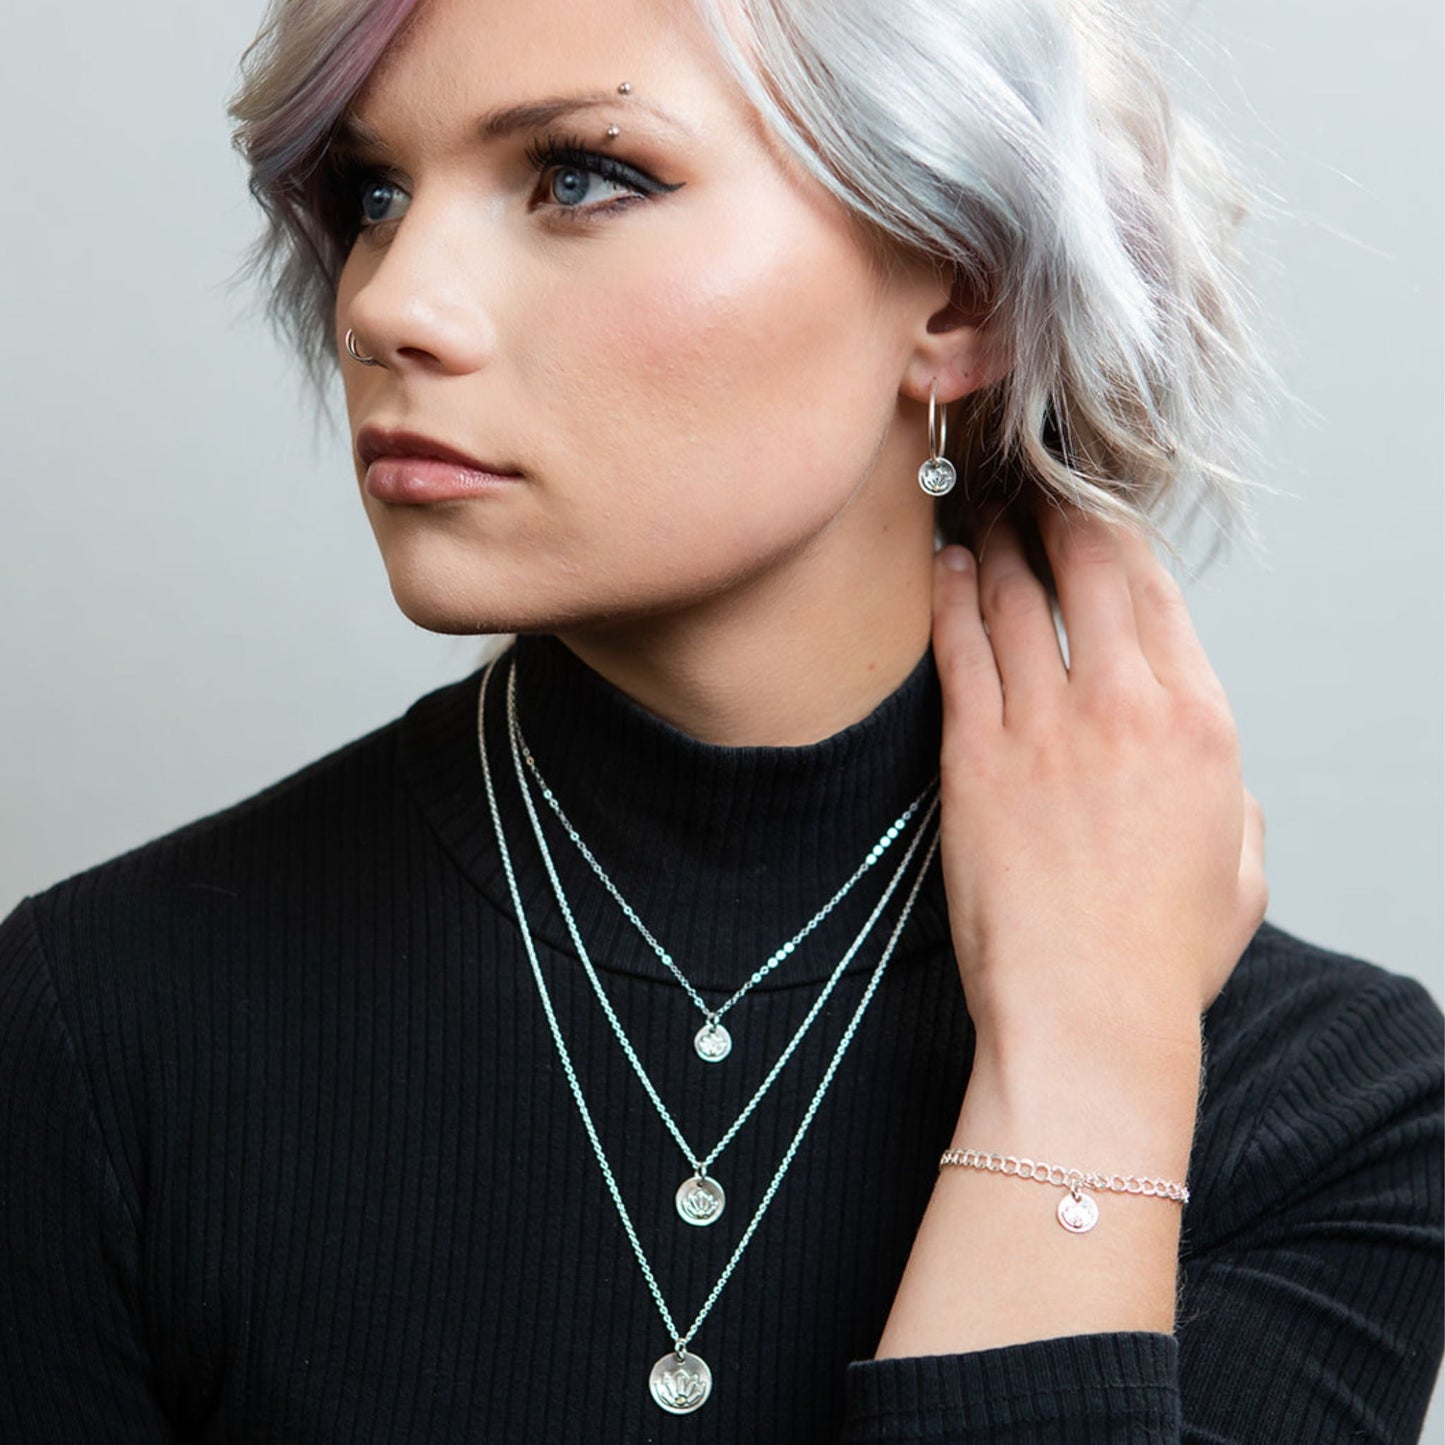 Model wearing silver lotus necklace